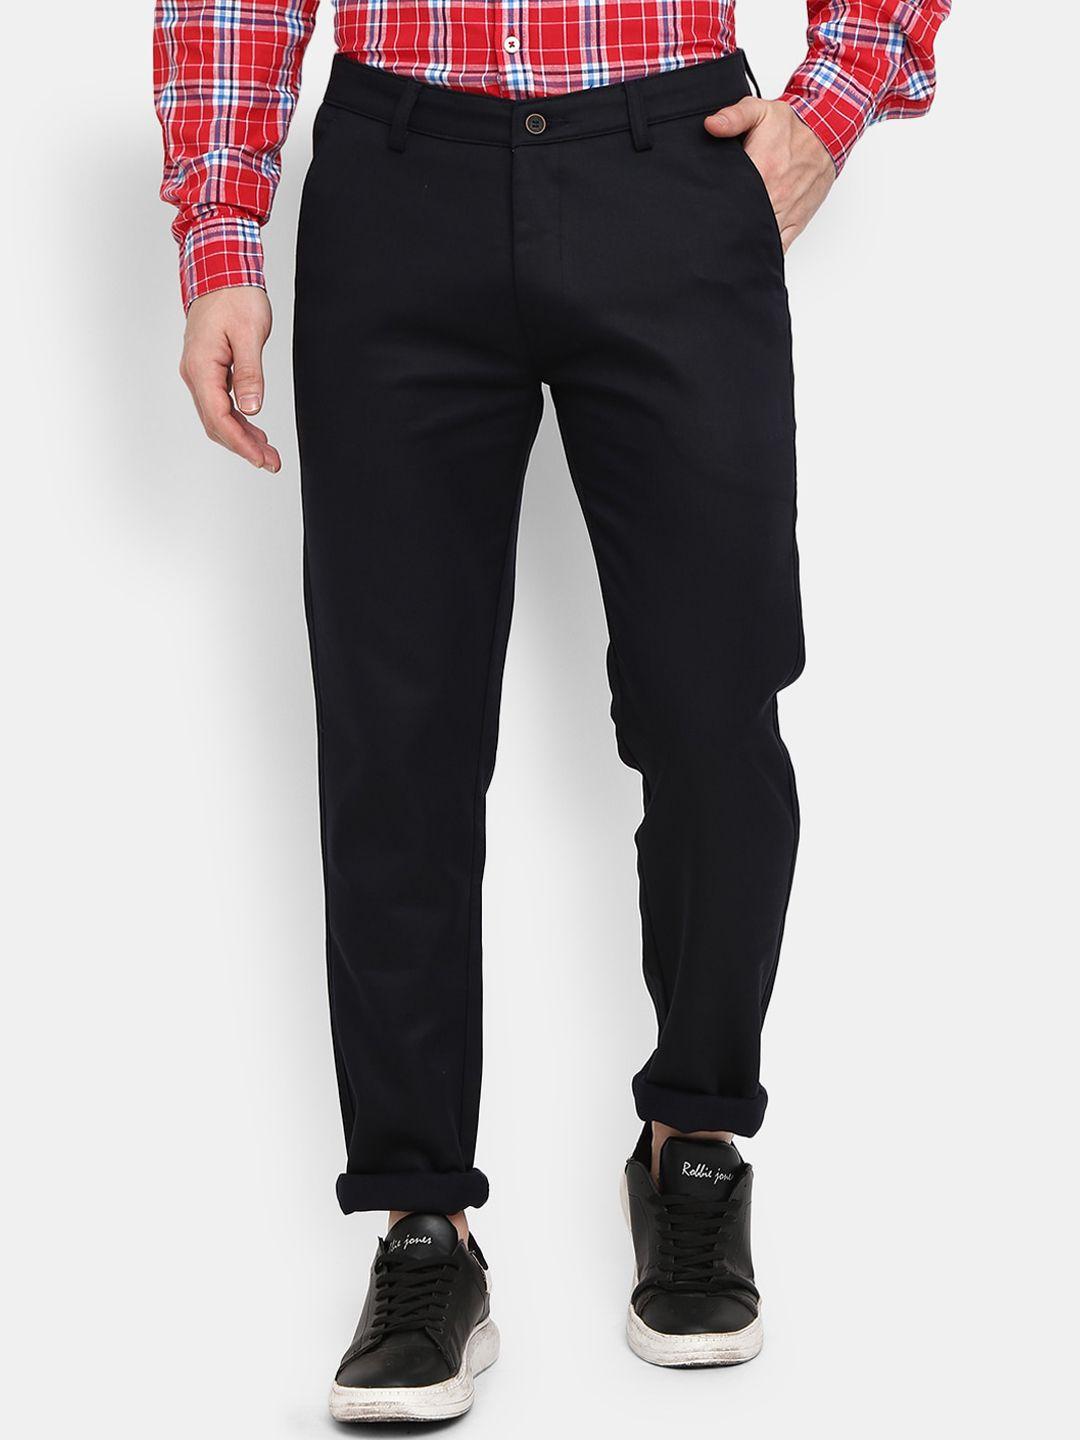 v-mart men navy blue classic slim fit cotton trouser